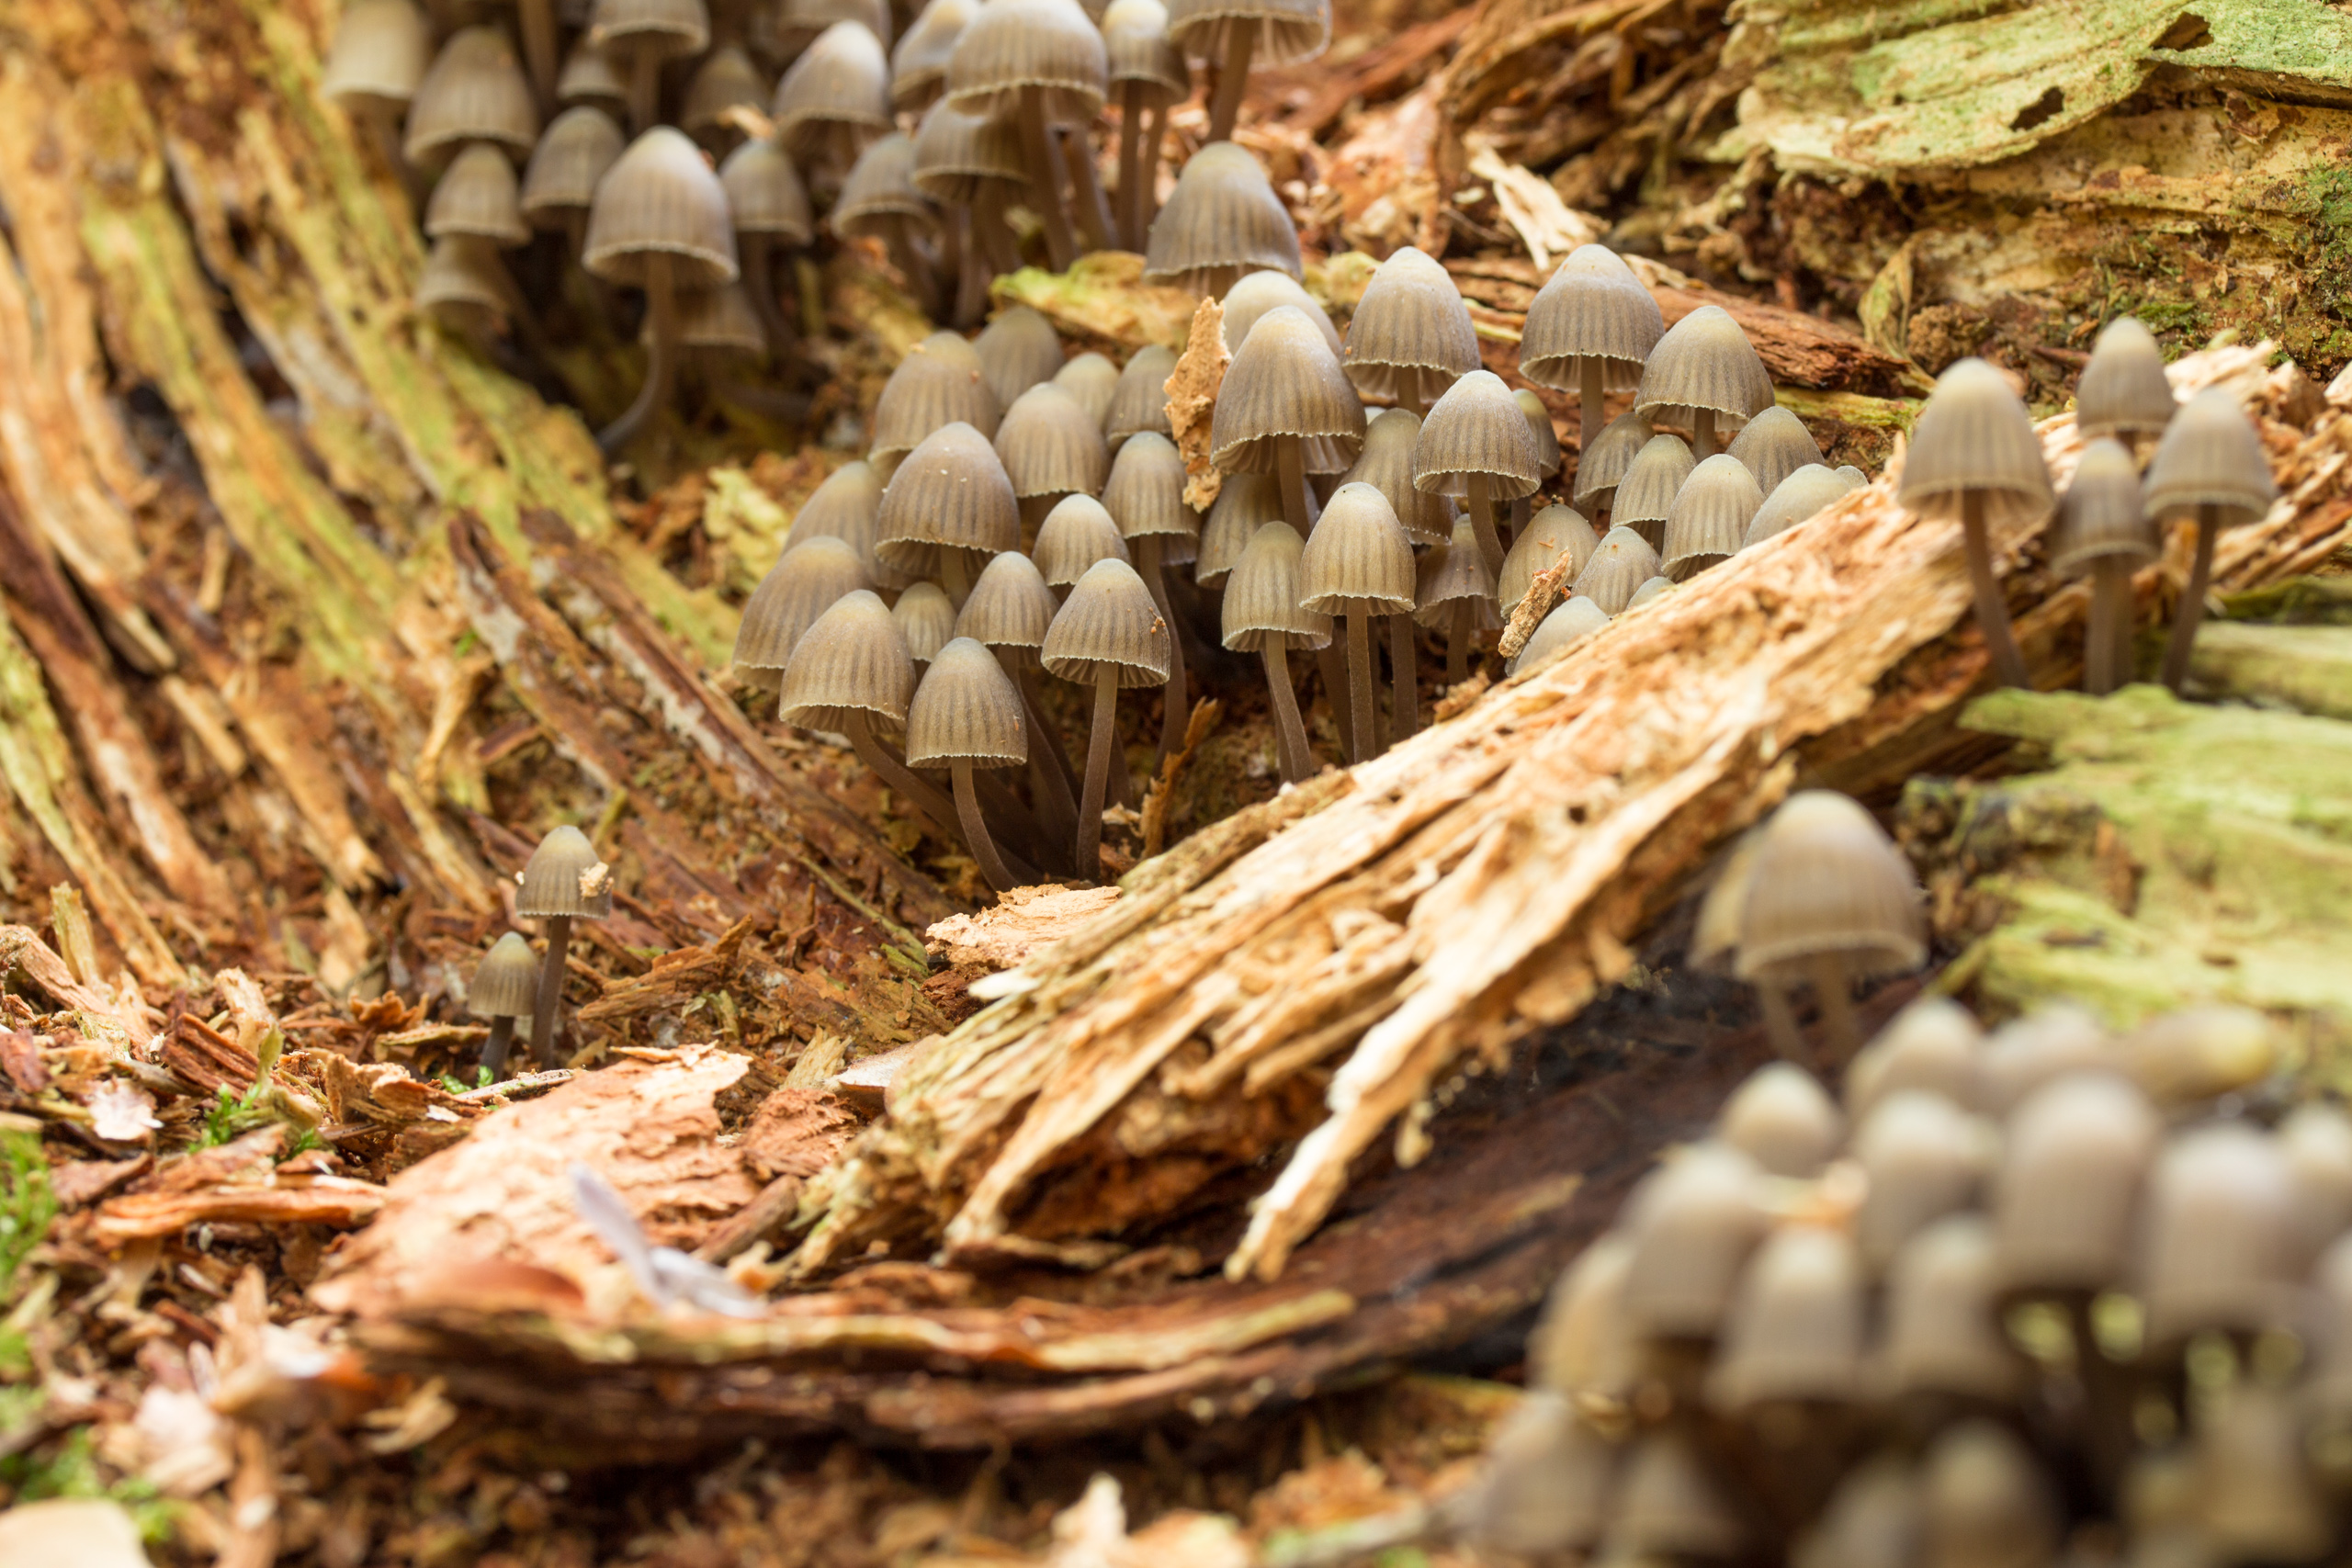 General 2560x1707 mushroom nature forest moss fungus wood